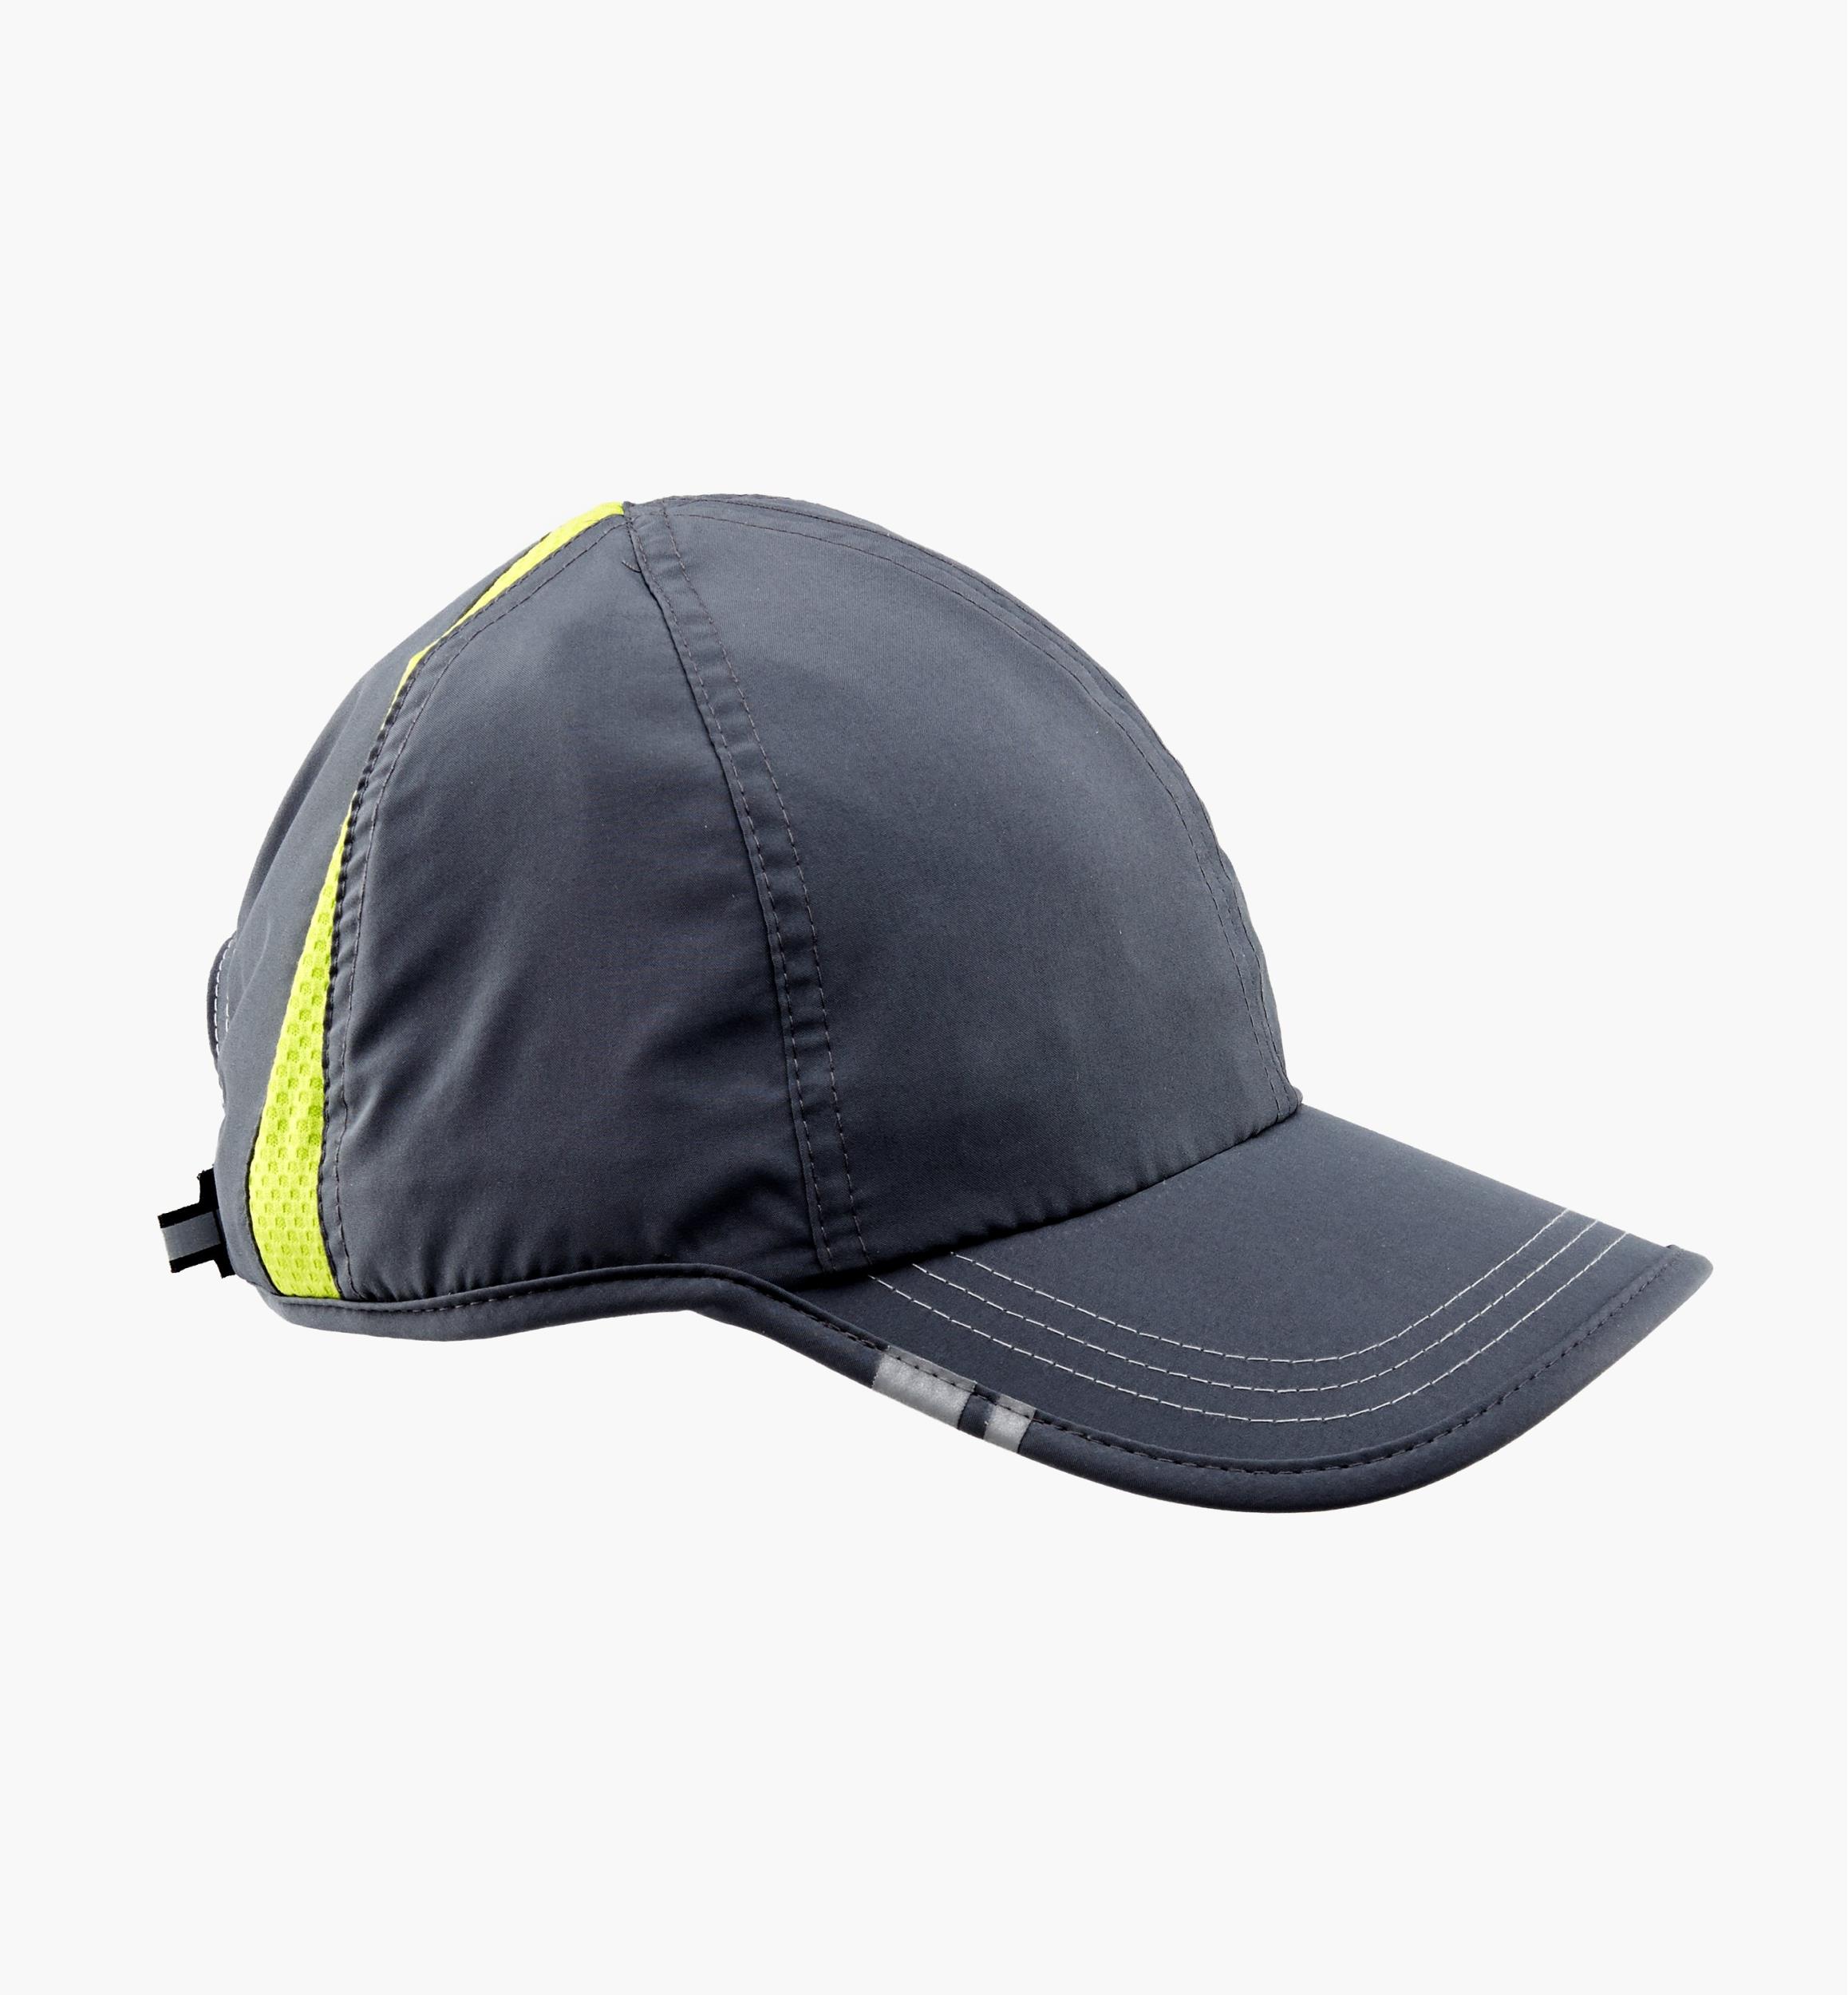 Baseball Caps, Sun & Waterproof Hats - Lee Valley Tools